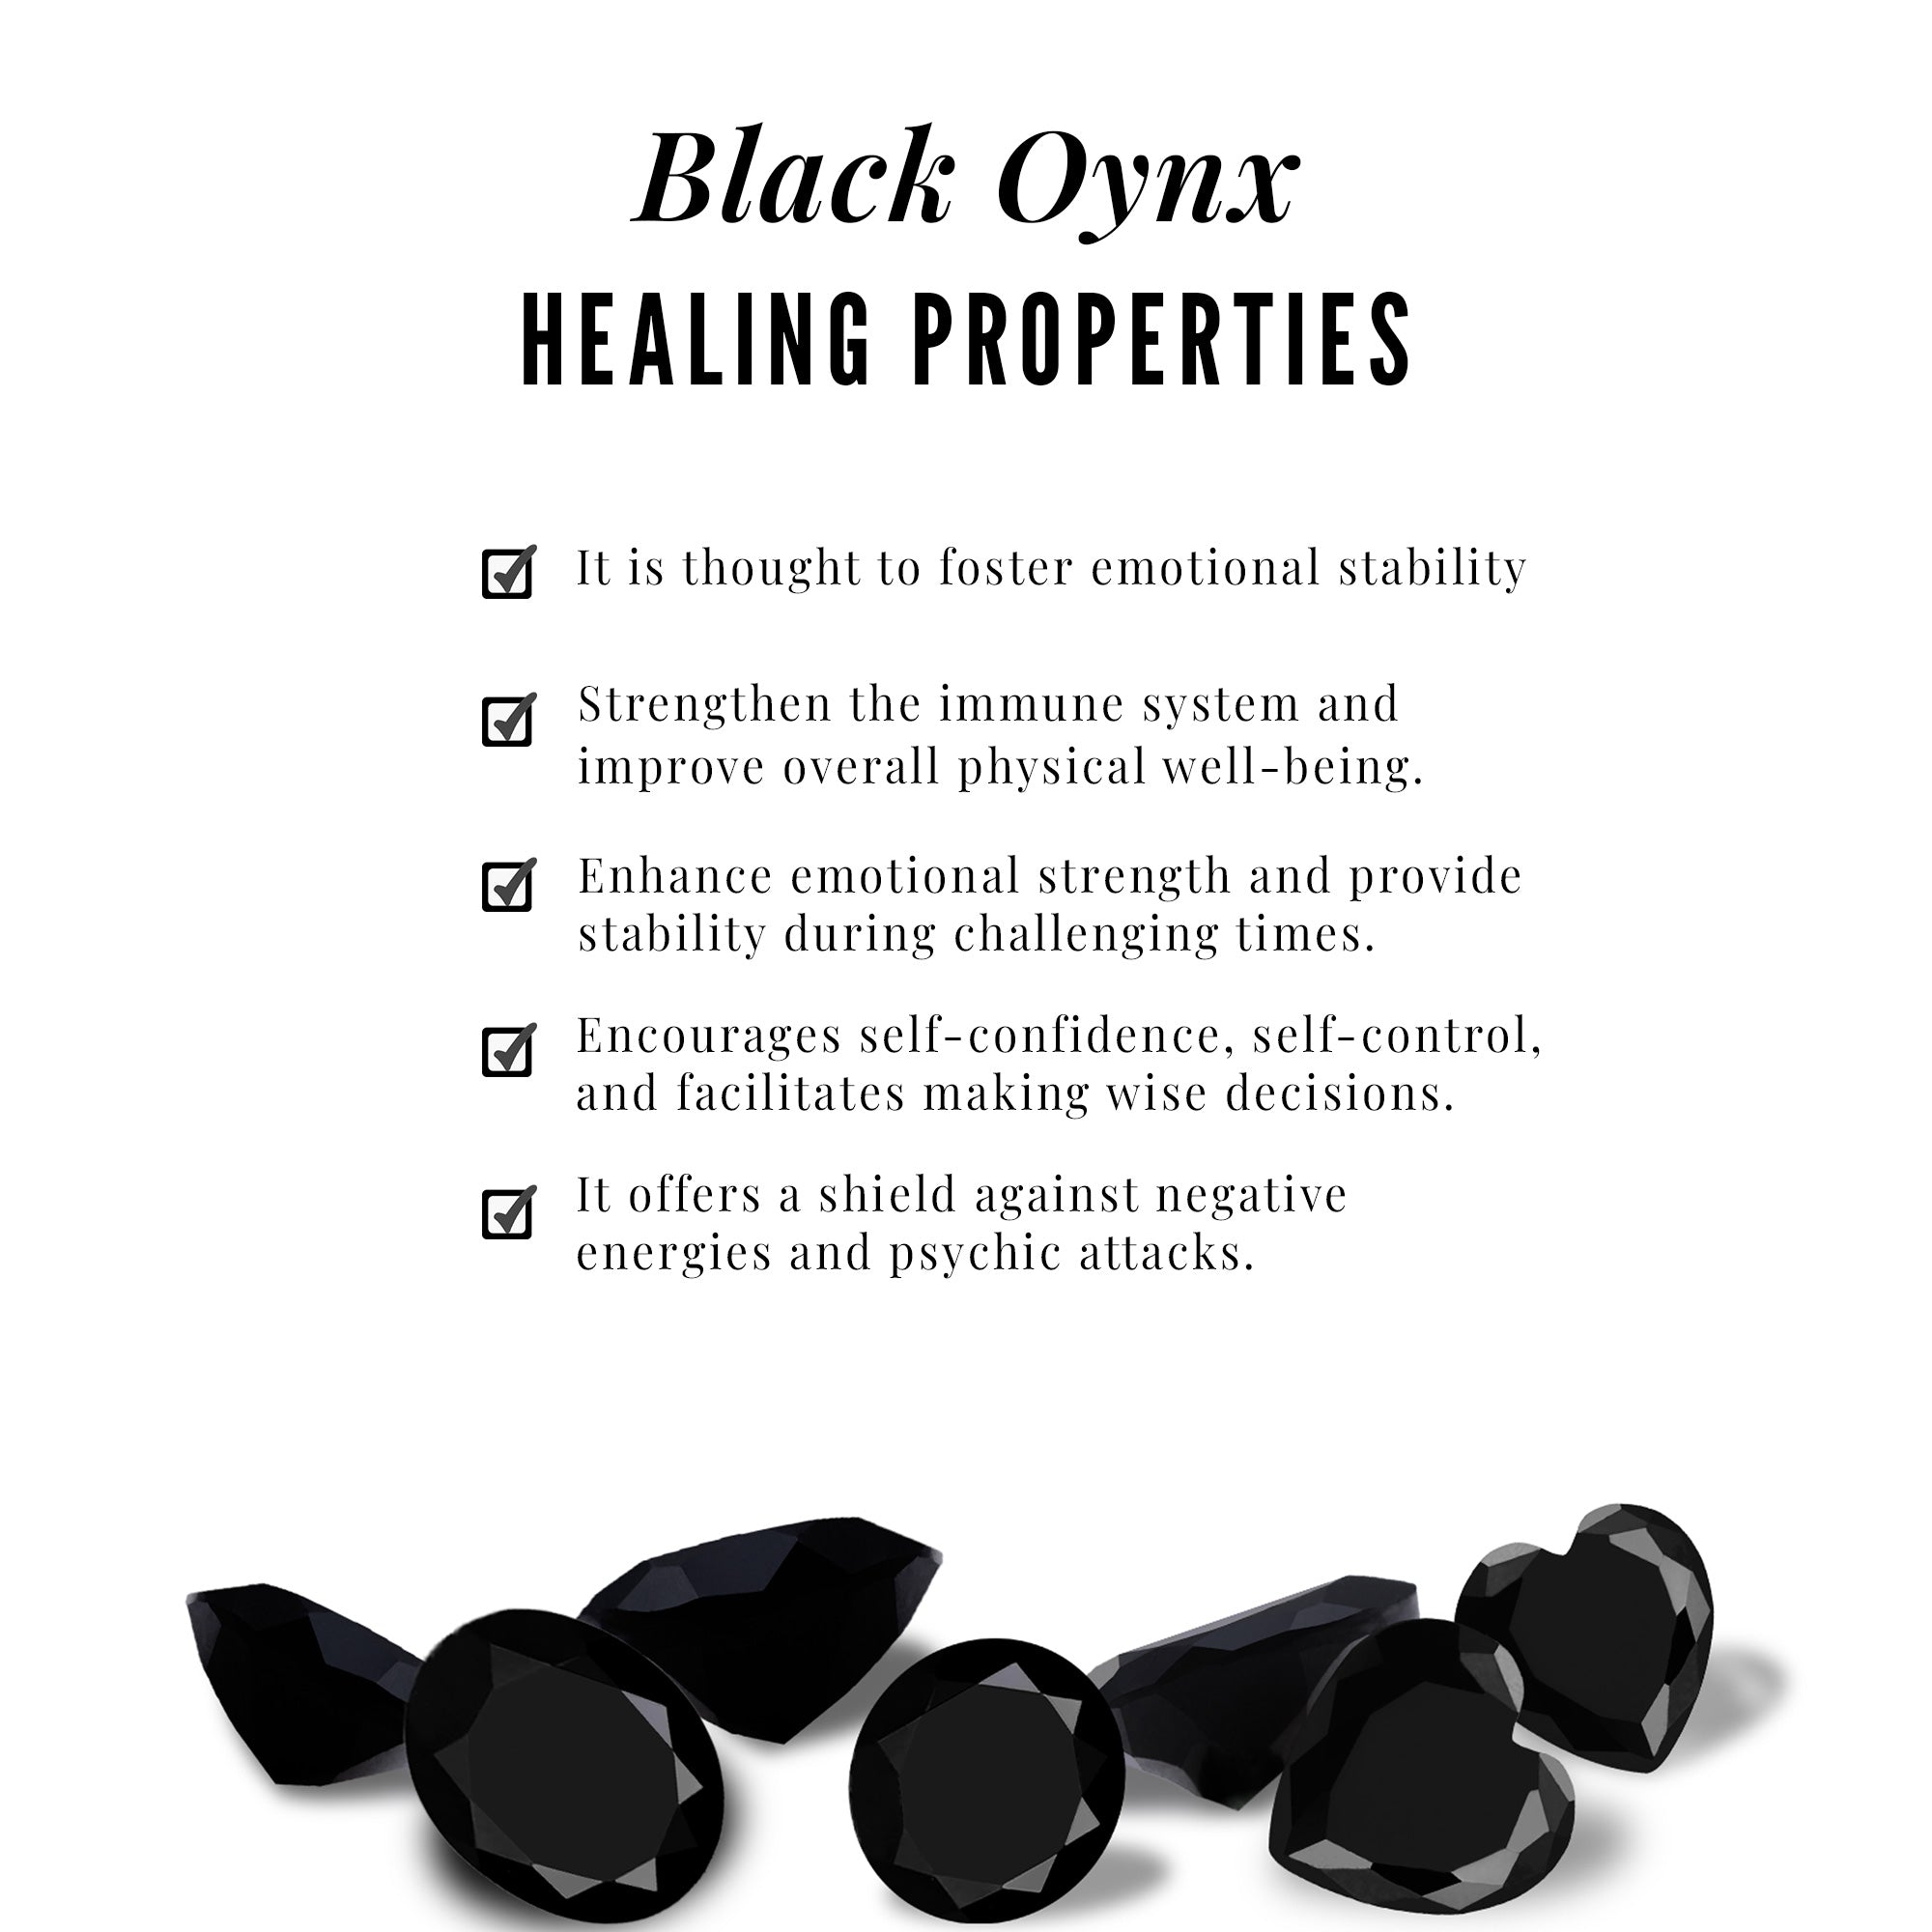 Oval Black Onyx and Diamond Hoop Drop Earrings Black Onyx - ( AAA ) - Quality - Rosec Jewels